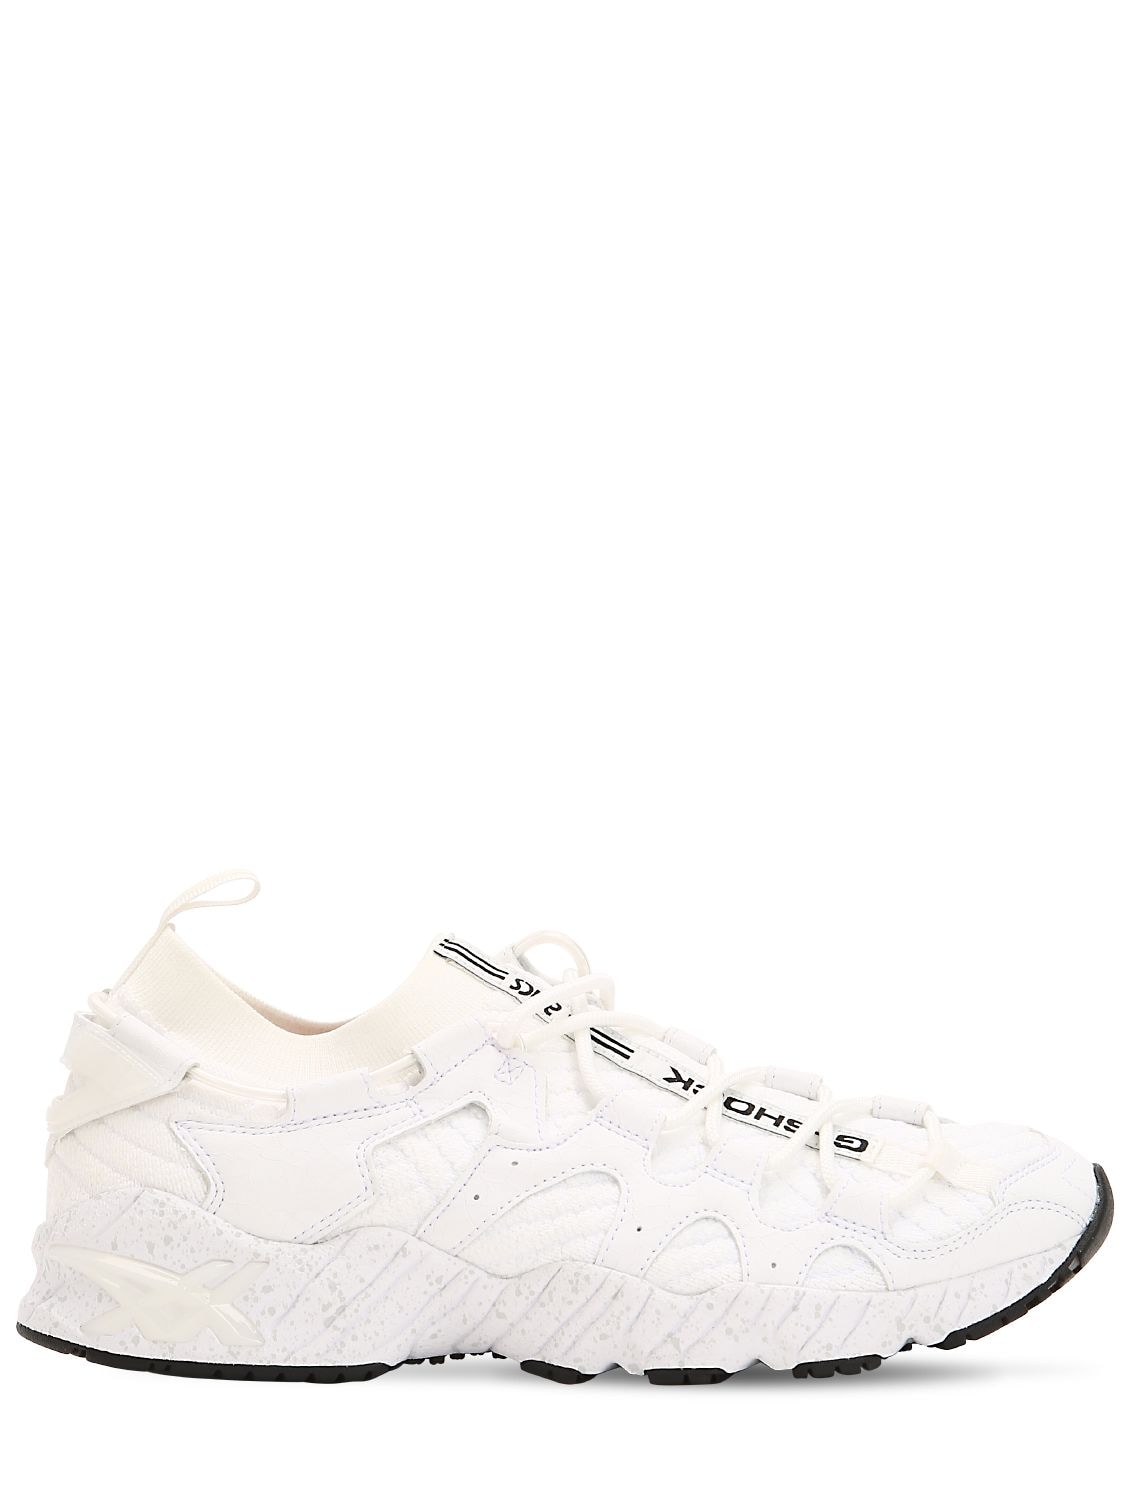 Asics Gel Mai X Casio Sneakers In White | ModeSens